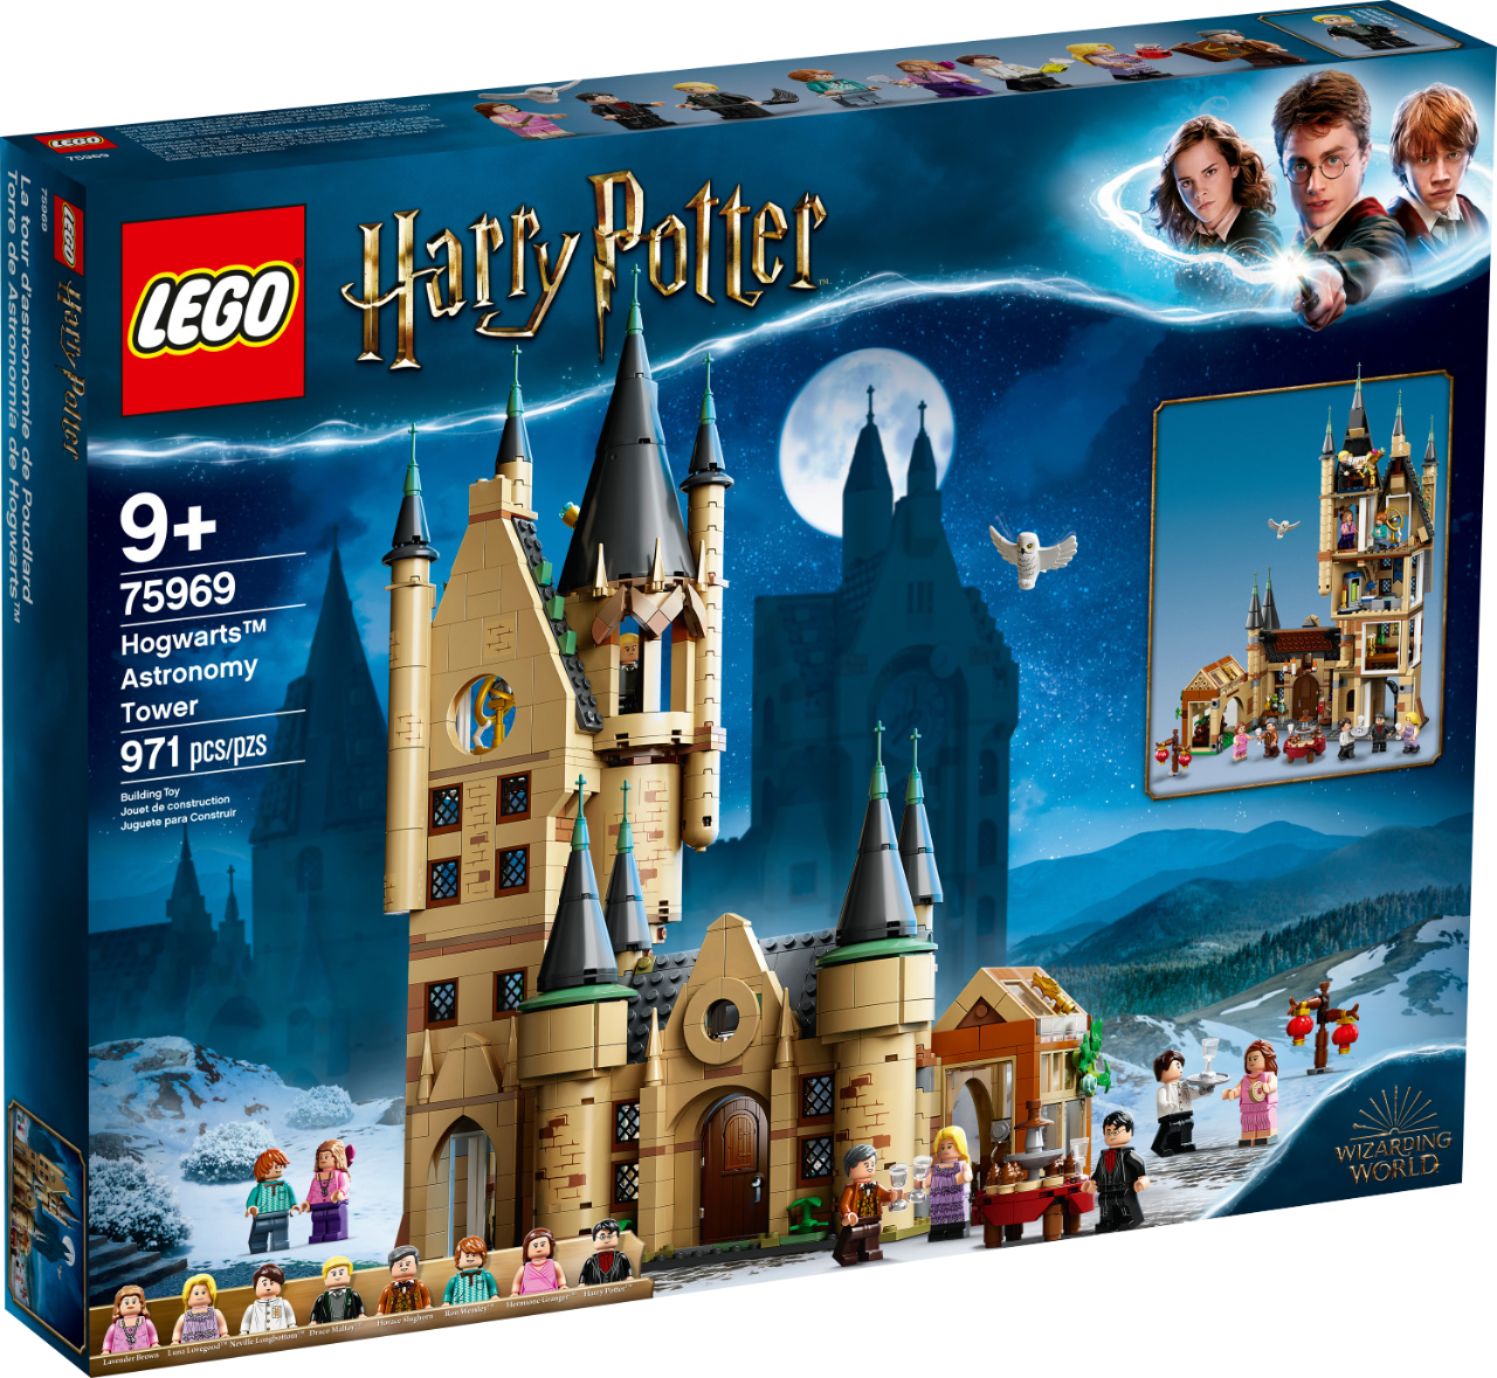 Best Buy: LEGO Harry Potter Hogwarts Great Hall 75954 6212644